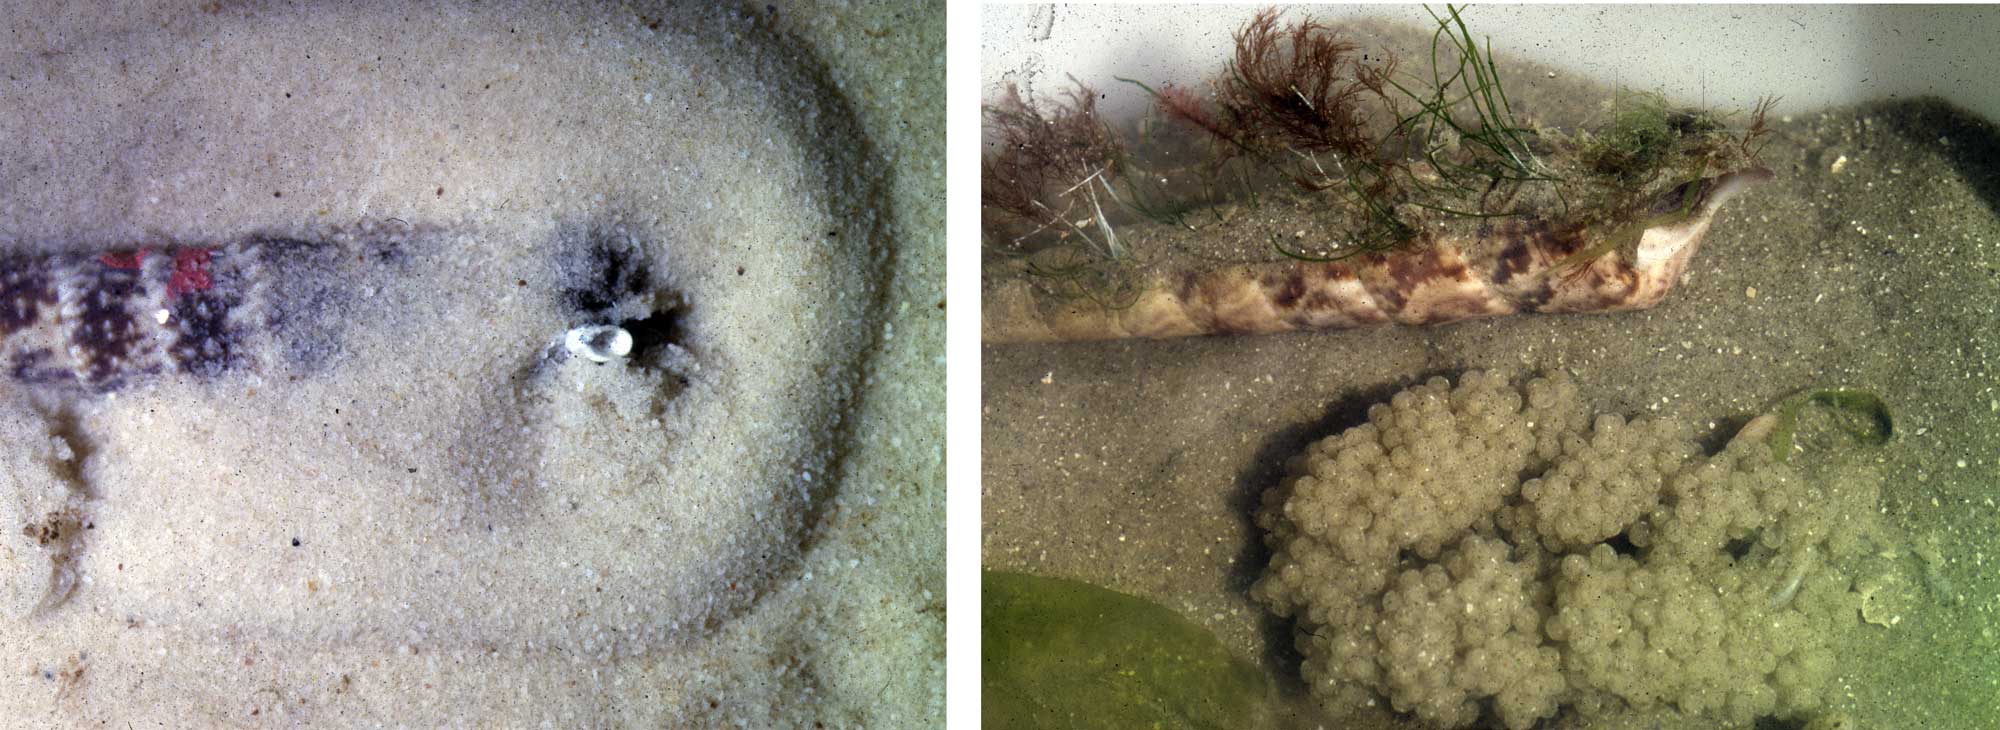 Two photographs of living Turritella gonostoma snails.